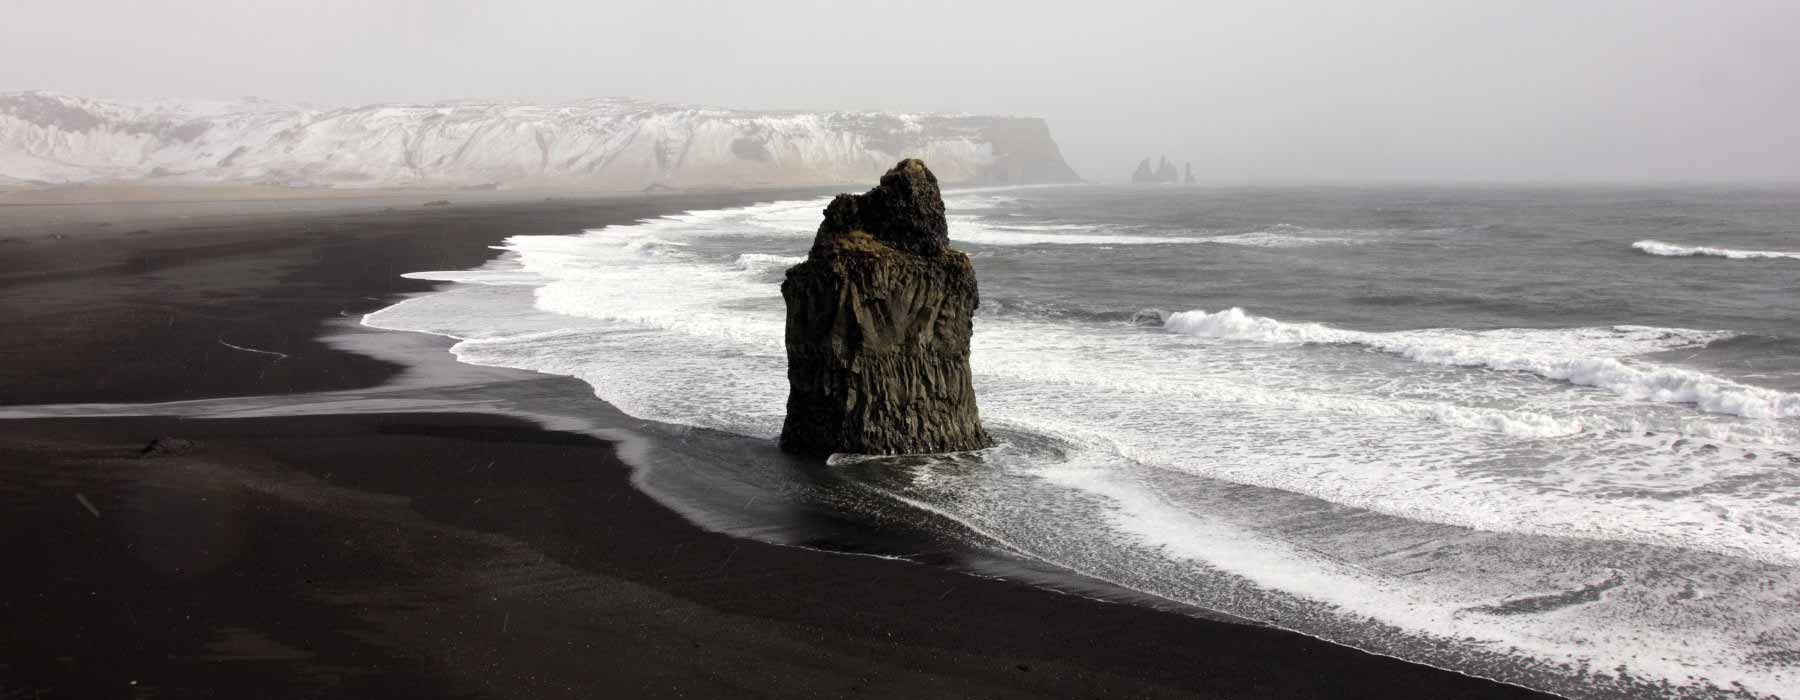 Iceland<br class="hidden-md hidden-lg" /> Luxury Adventure Holidays